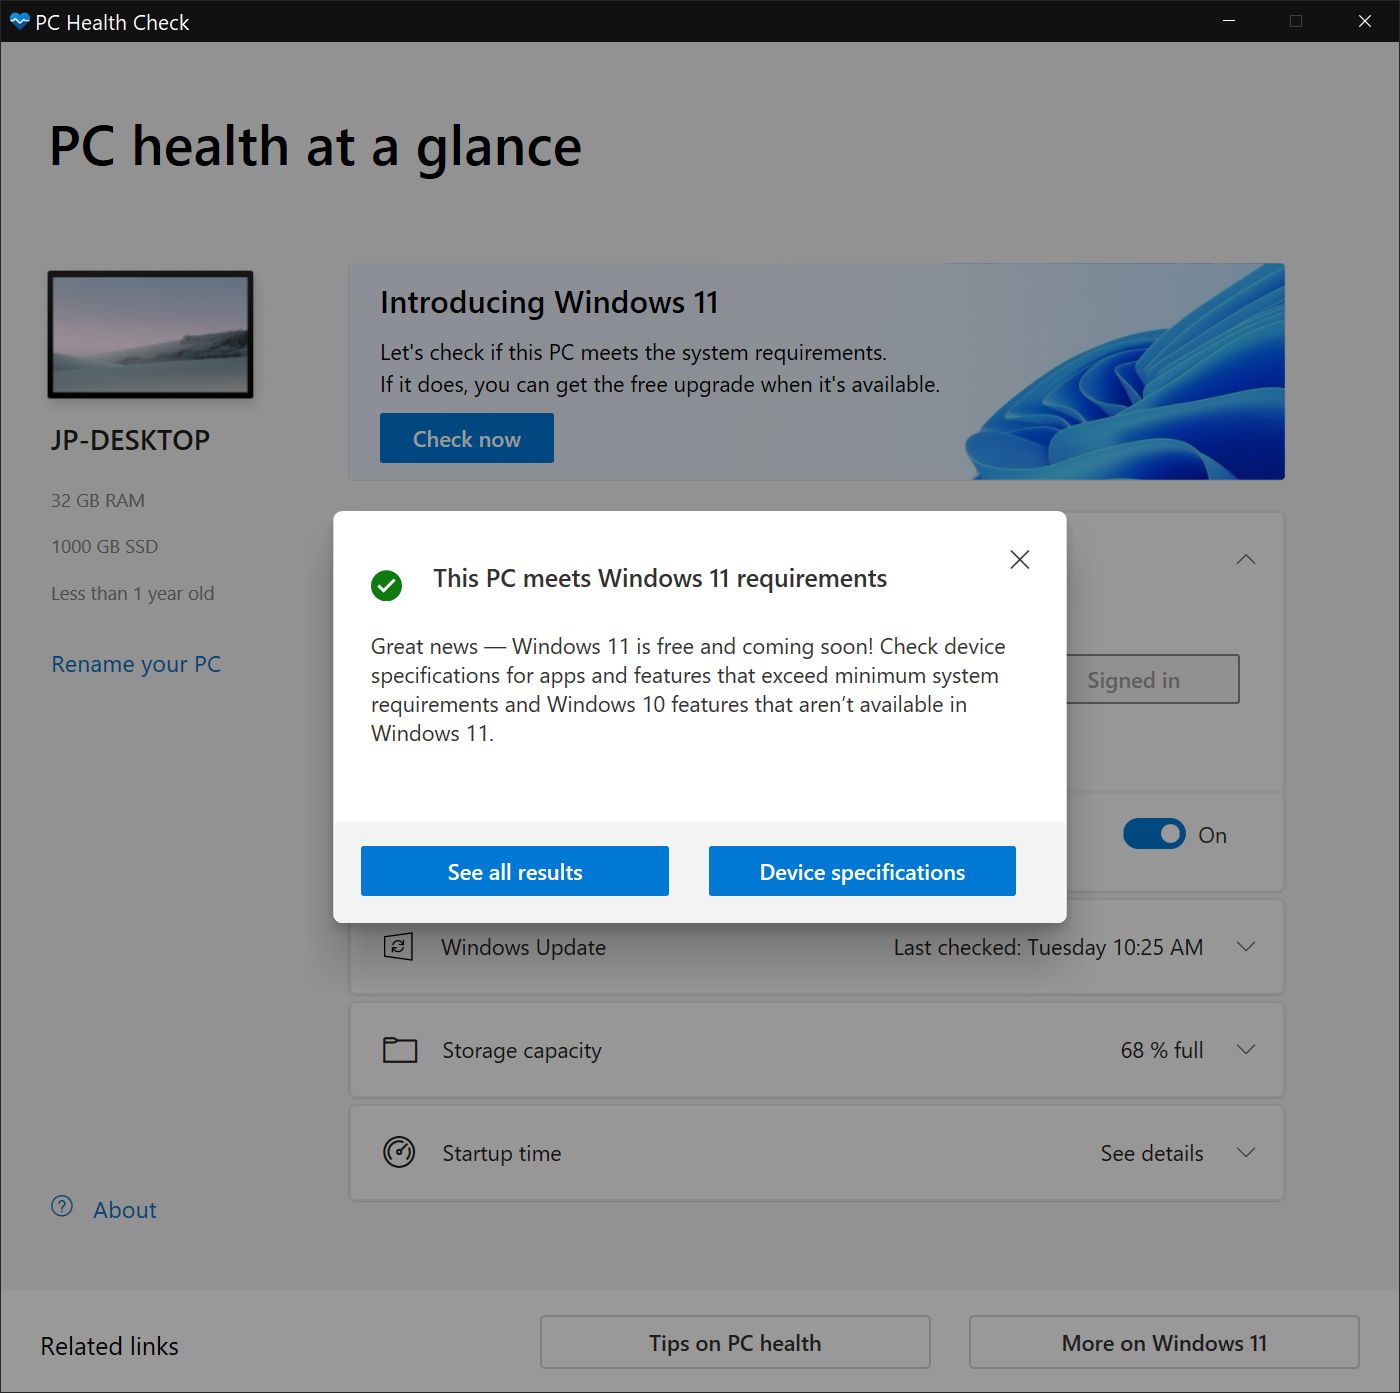 PC Meet Windows 11 Requirements